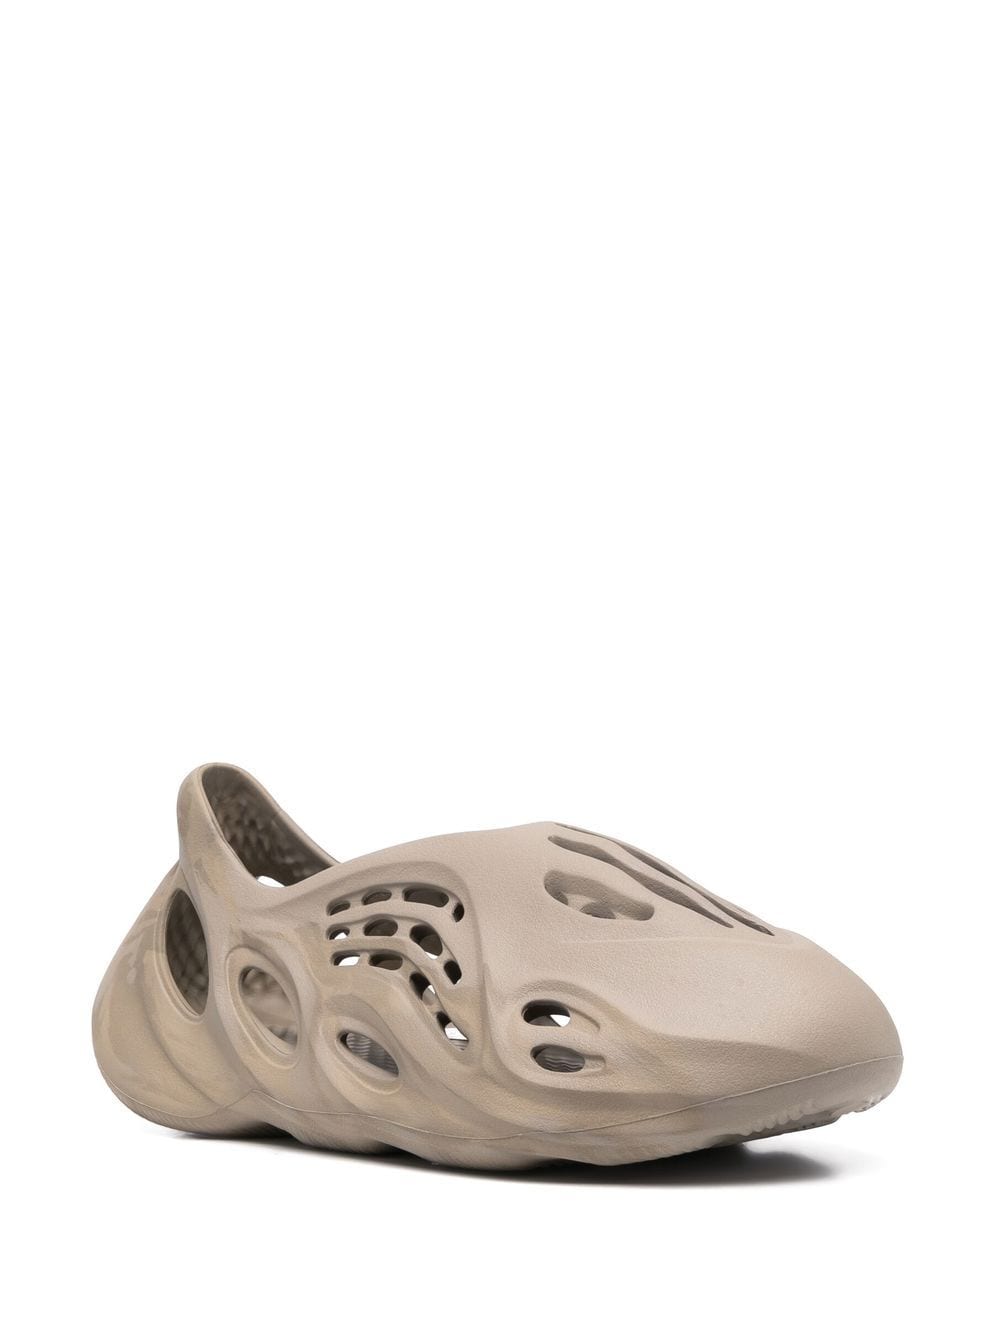 adidas Yeezy Sneakers YEEZY Foam Runner Stone Sage - Toni neutri